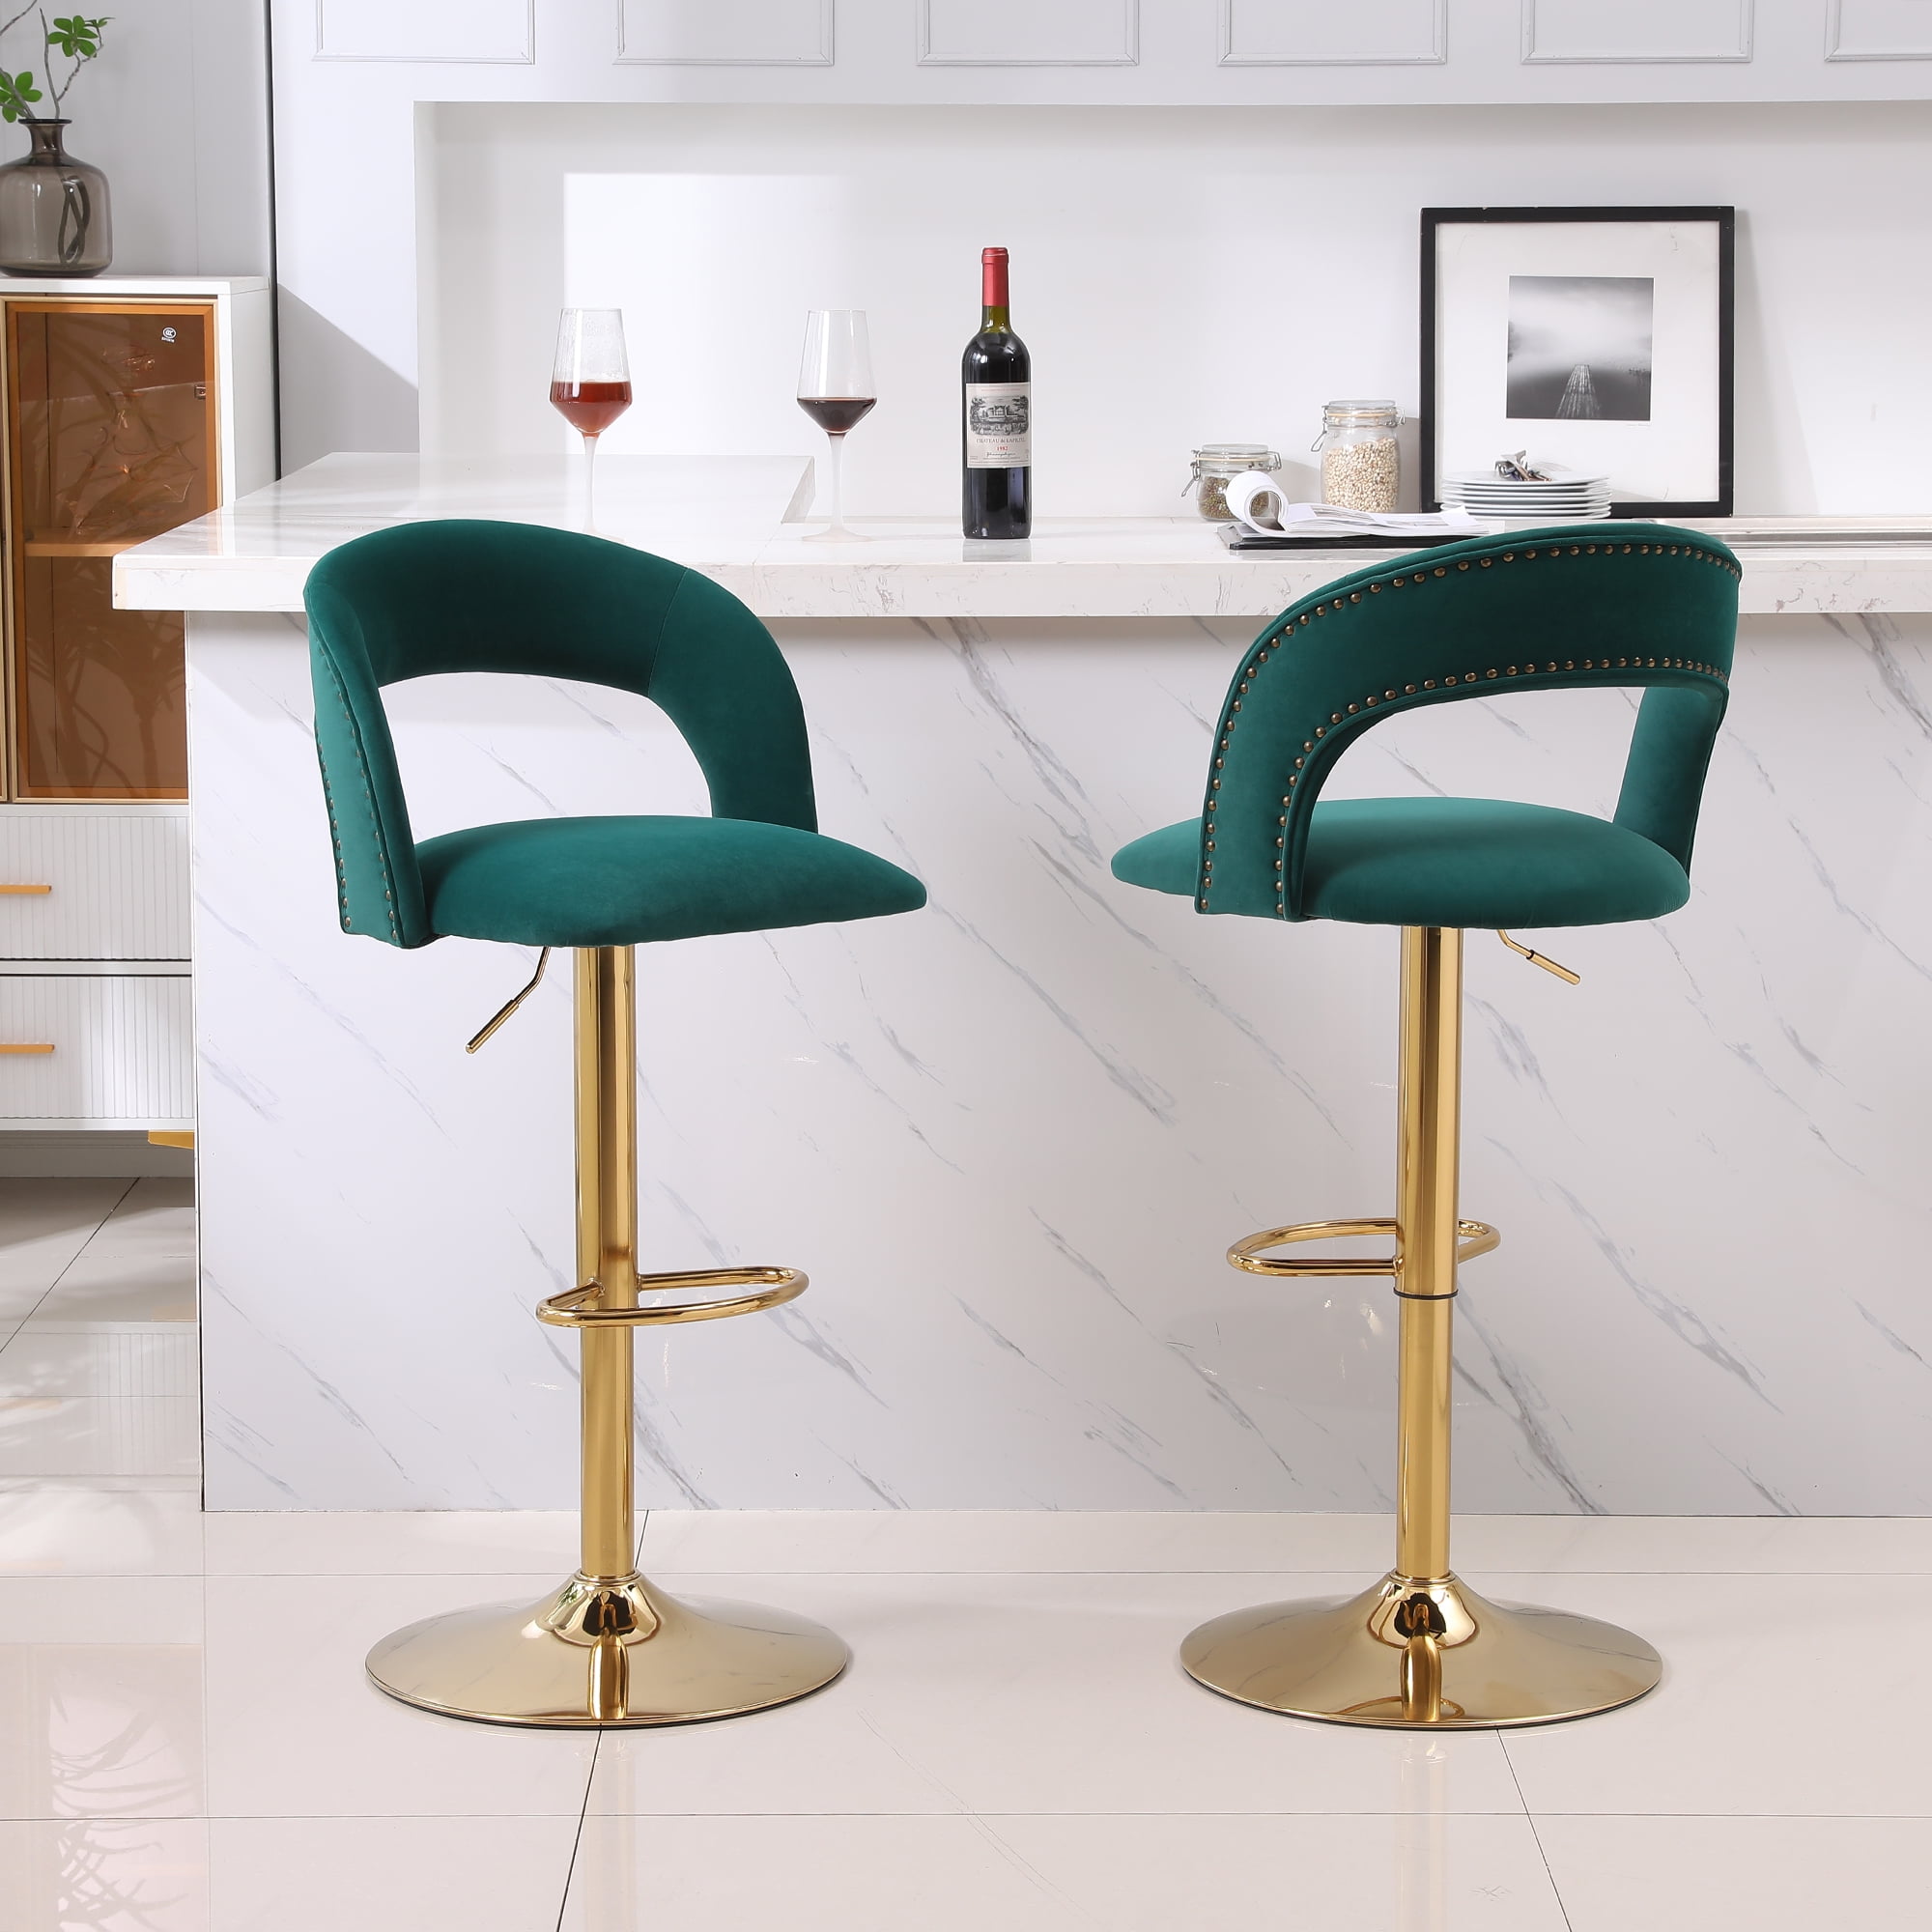 YYAo Swivel Bar Stools Chair Set of 2, Modern Adjustable Counter Height ...